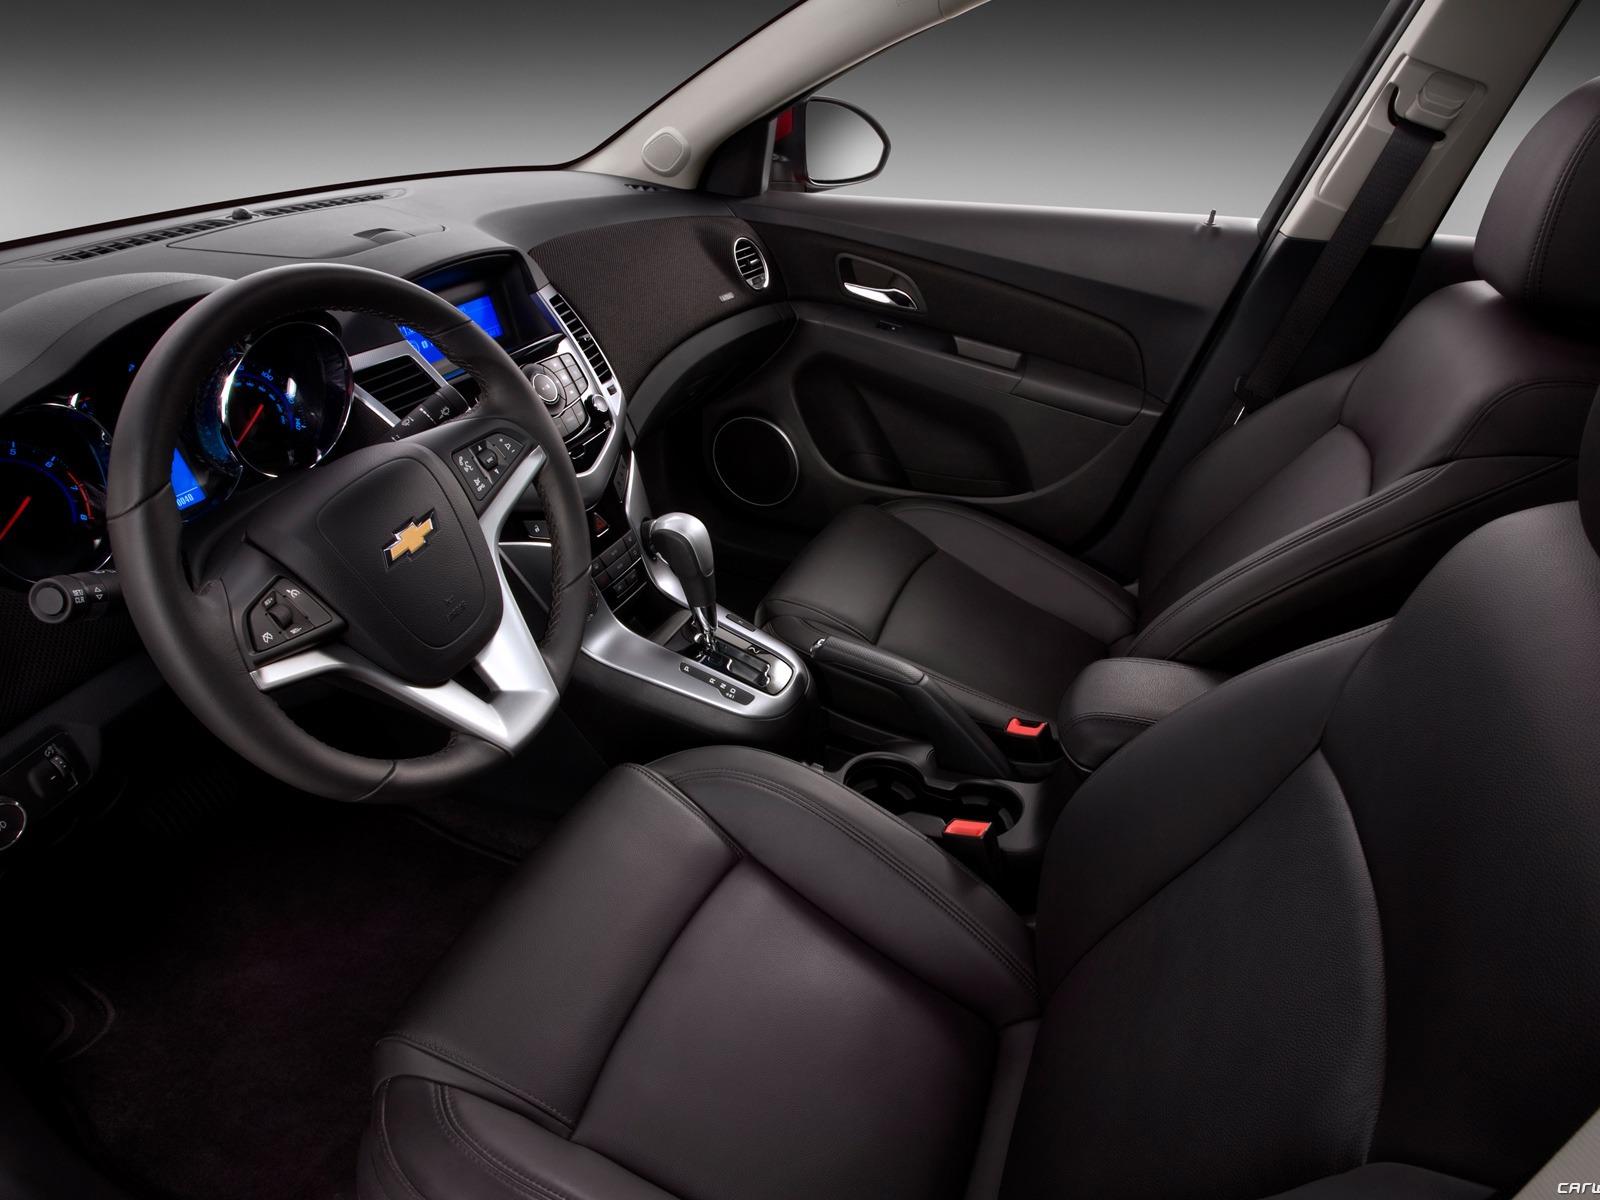 Chevrolet Cruze RS - 2011 雪佛蘭 #13 - 1600x1200